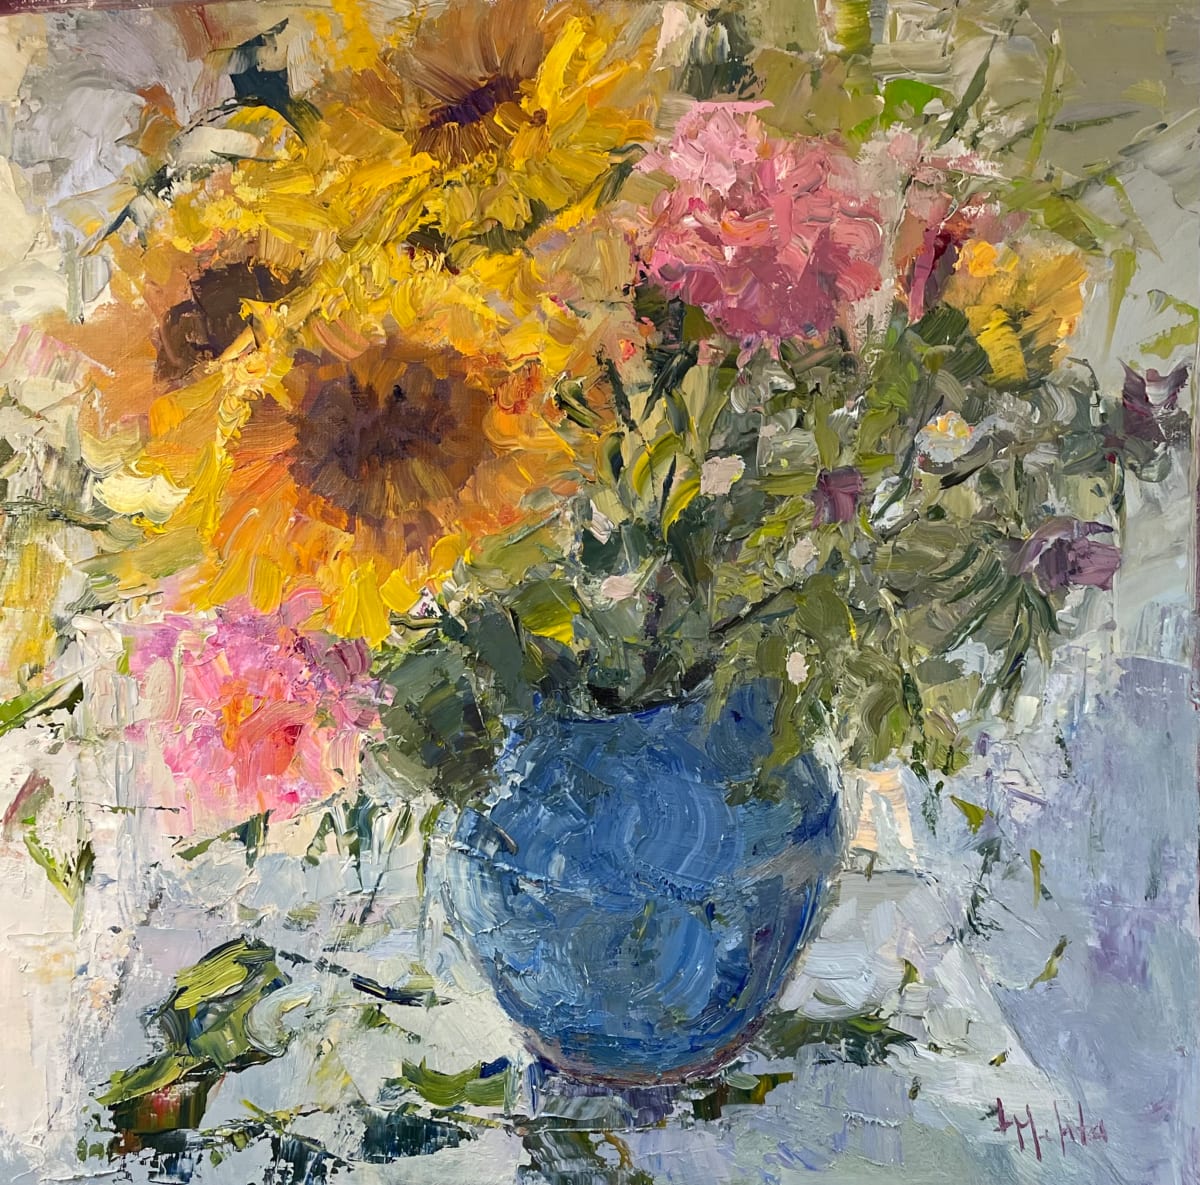 Sunflowers in Blue Vase by Lynn Mehta  Image: Sunflowers in a Blue Vase, 16x16